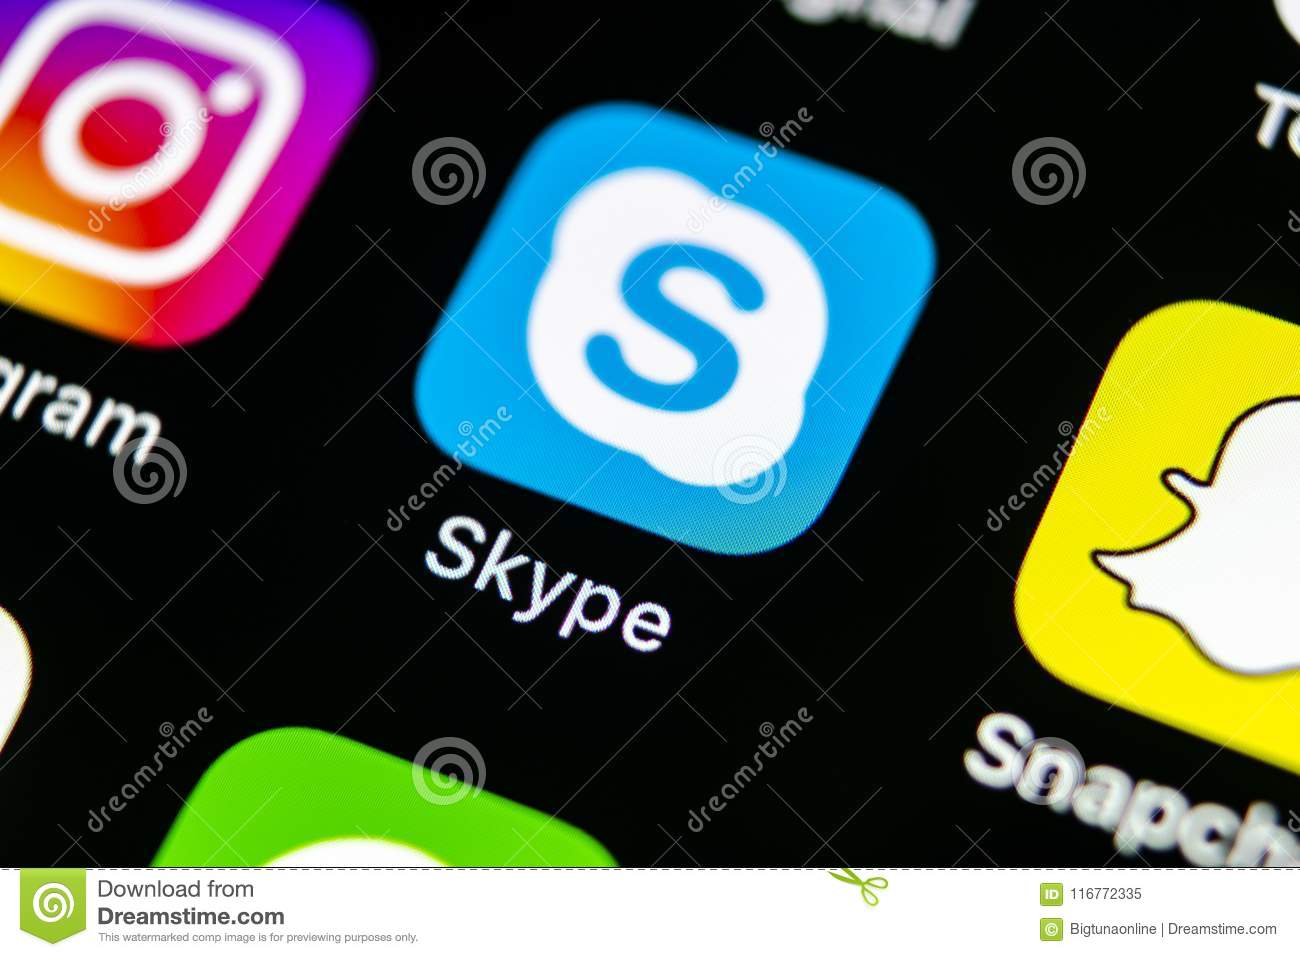 Skype Mac App Can